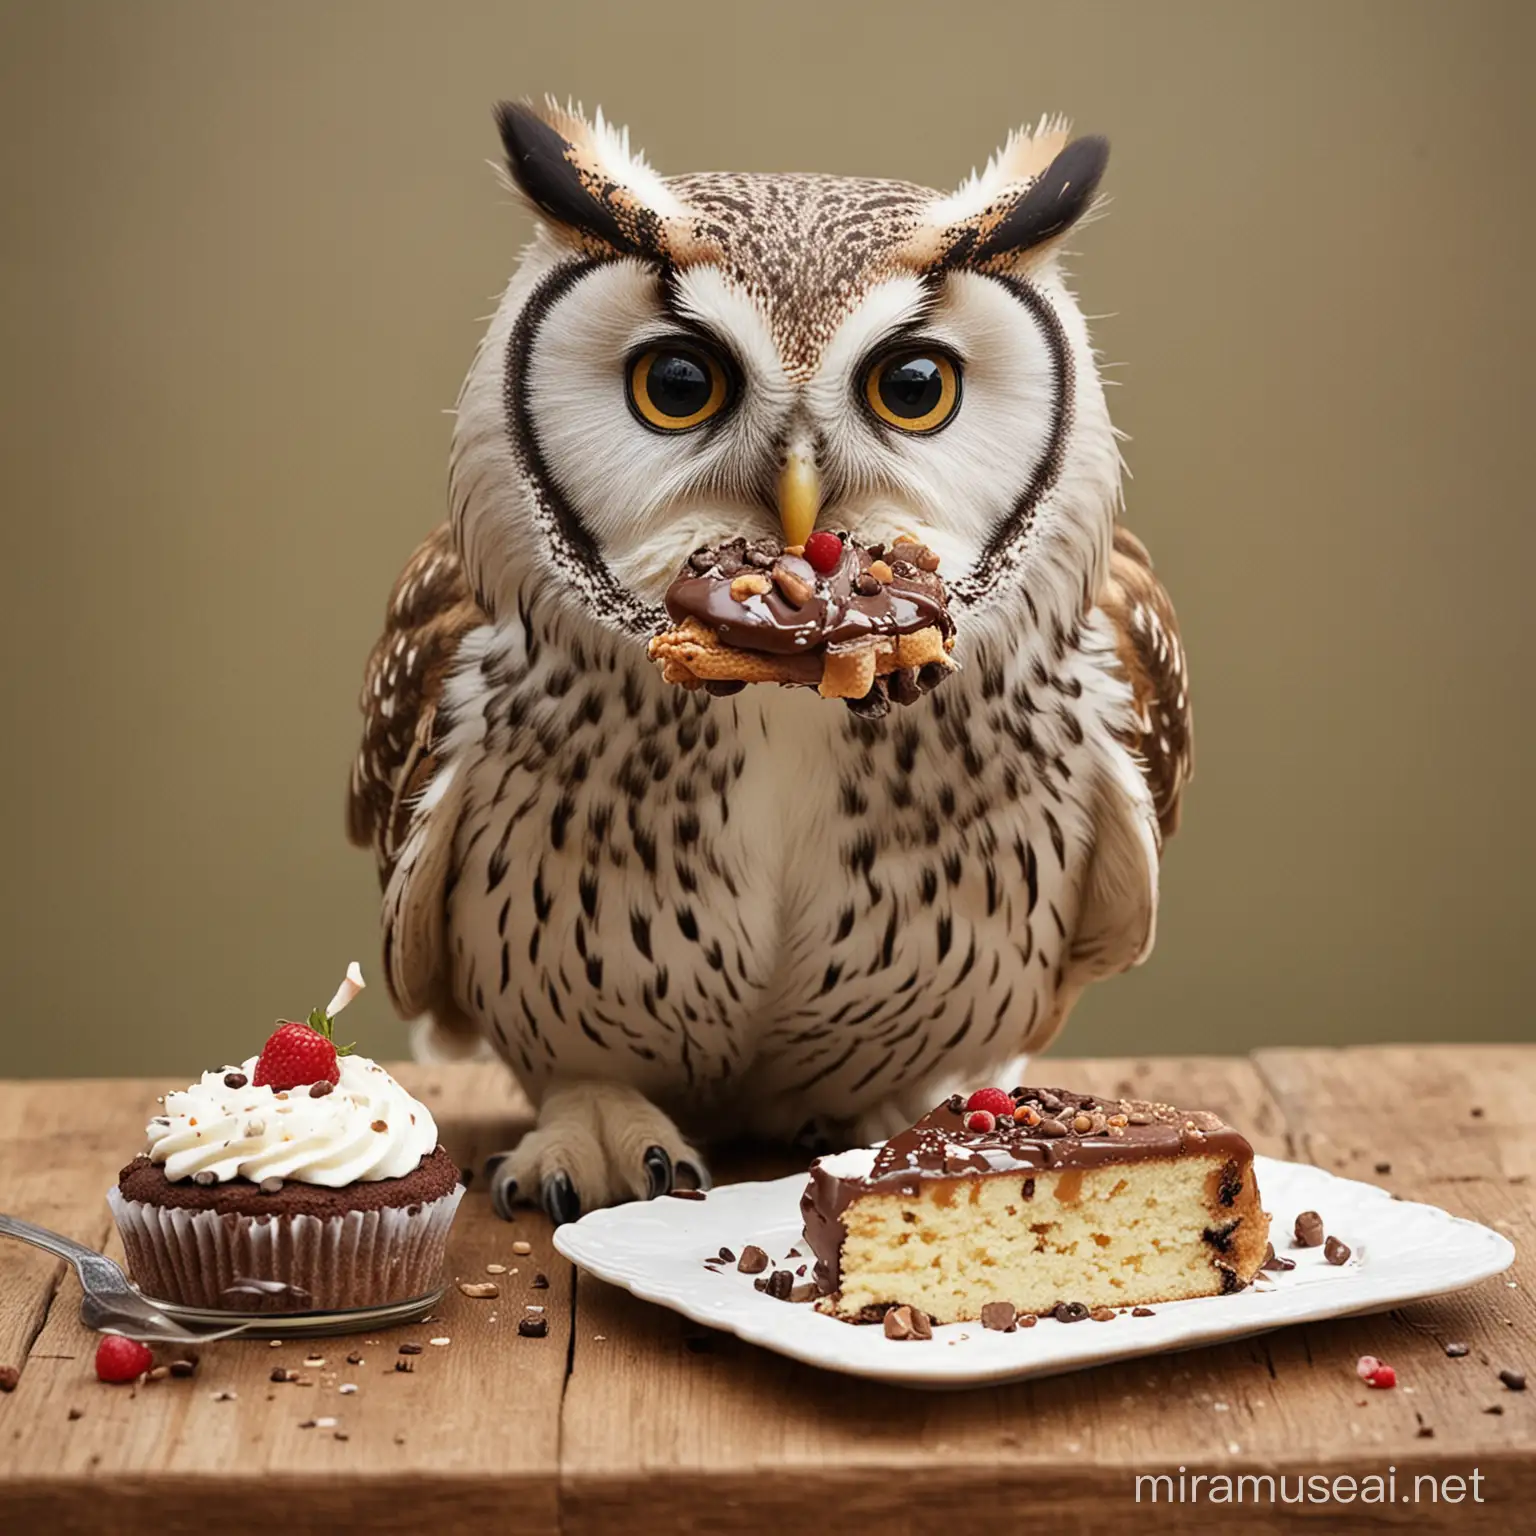 Owl eating cake